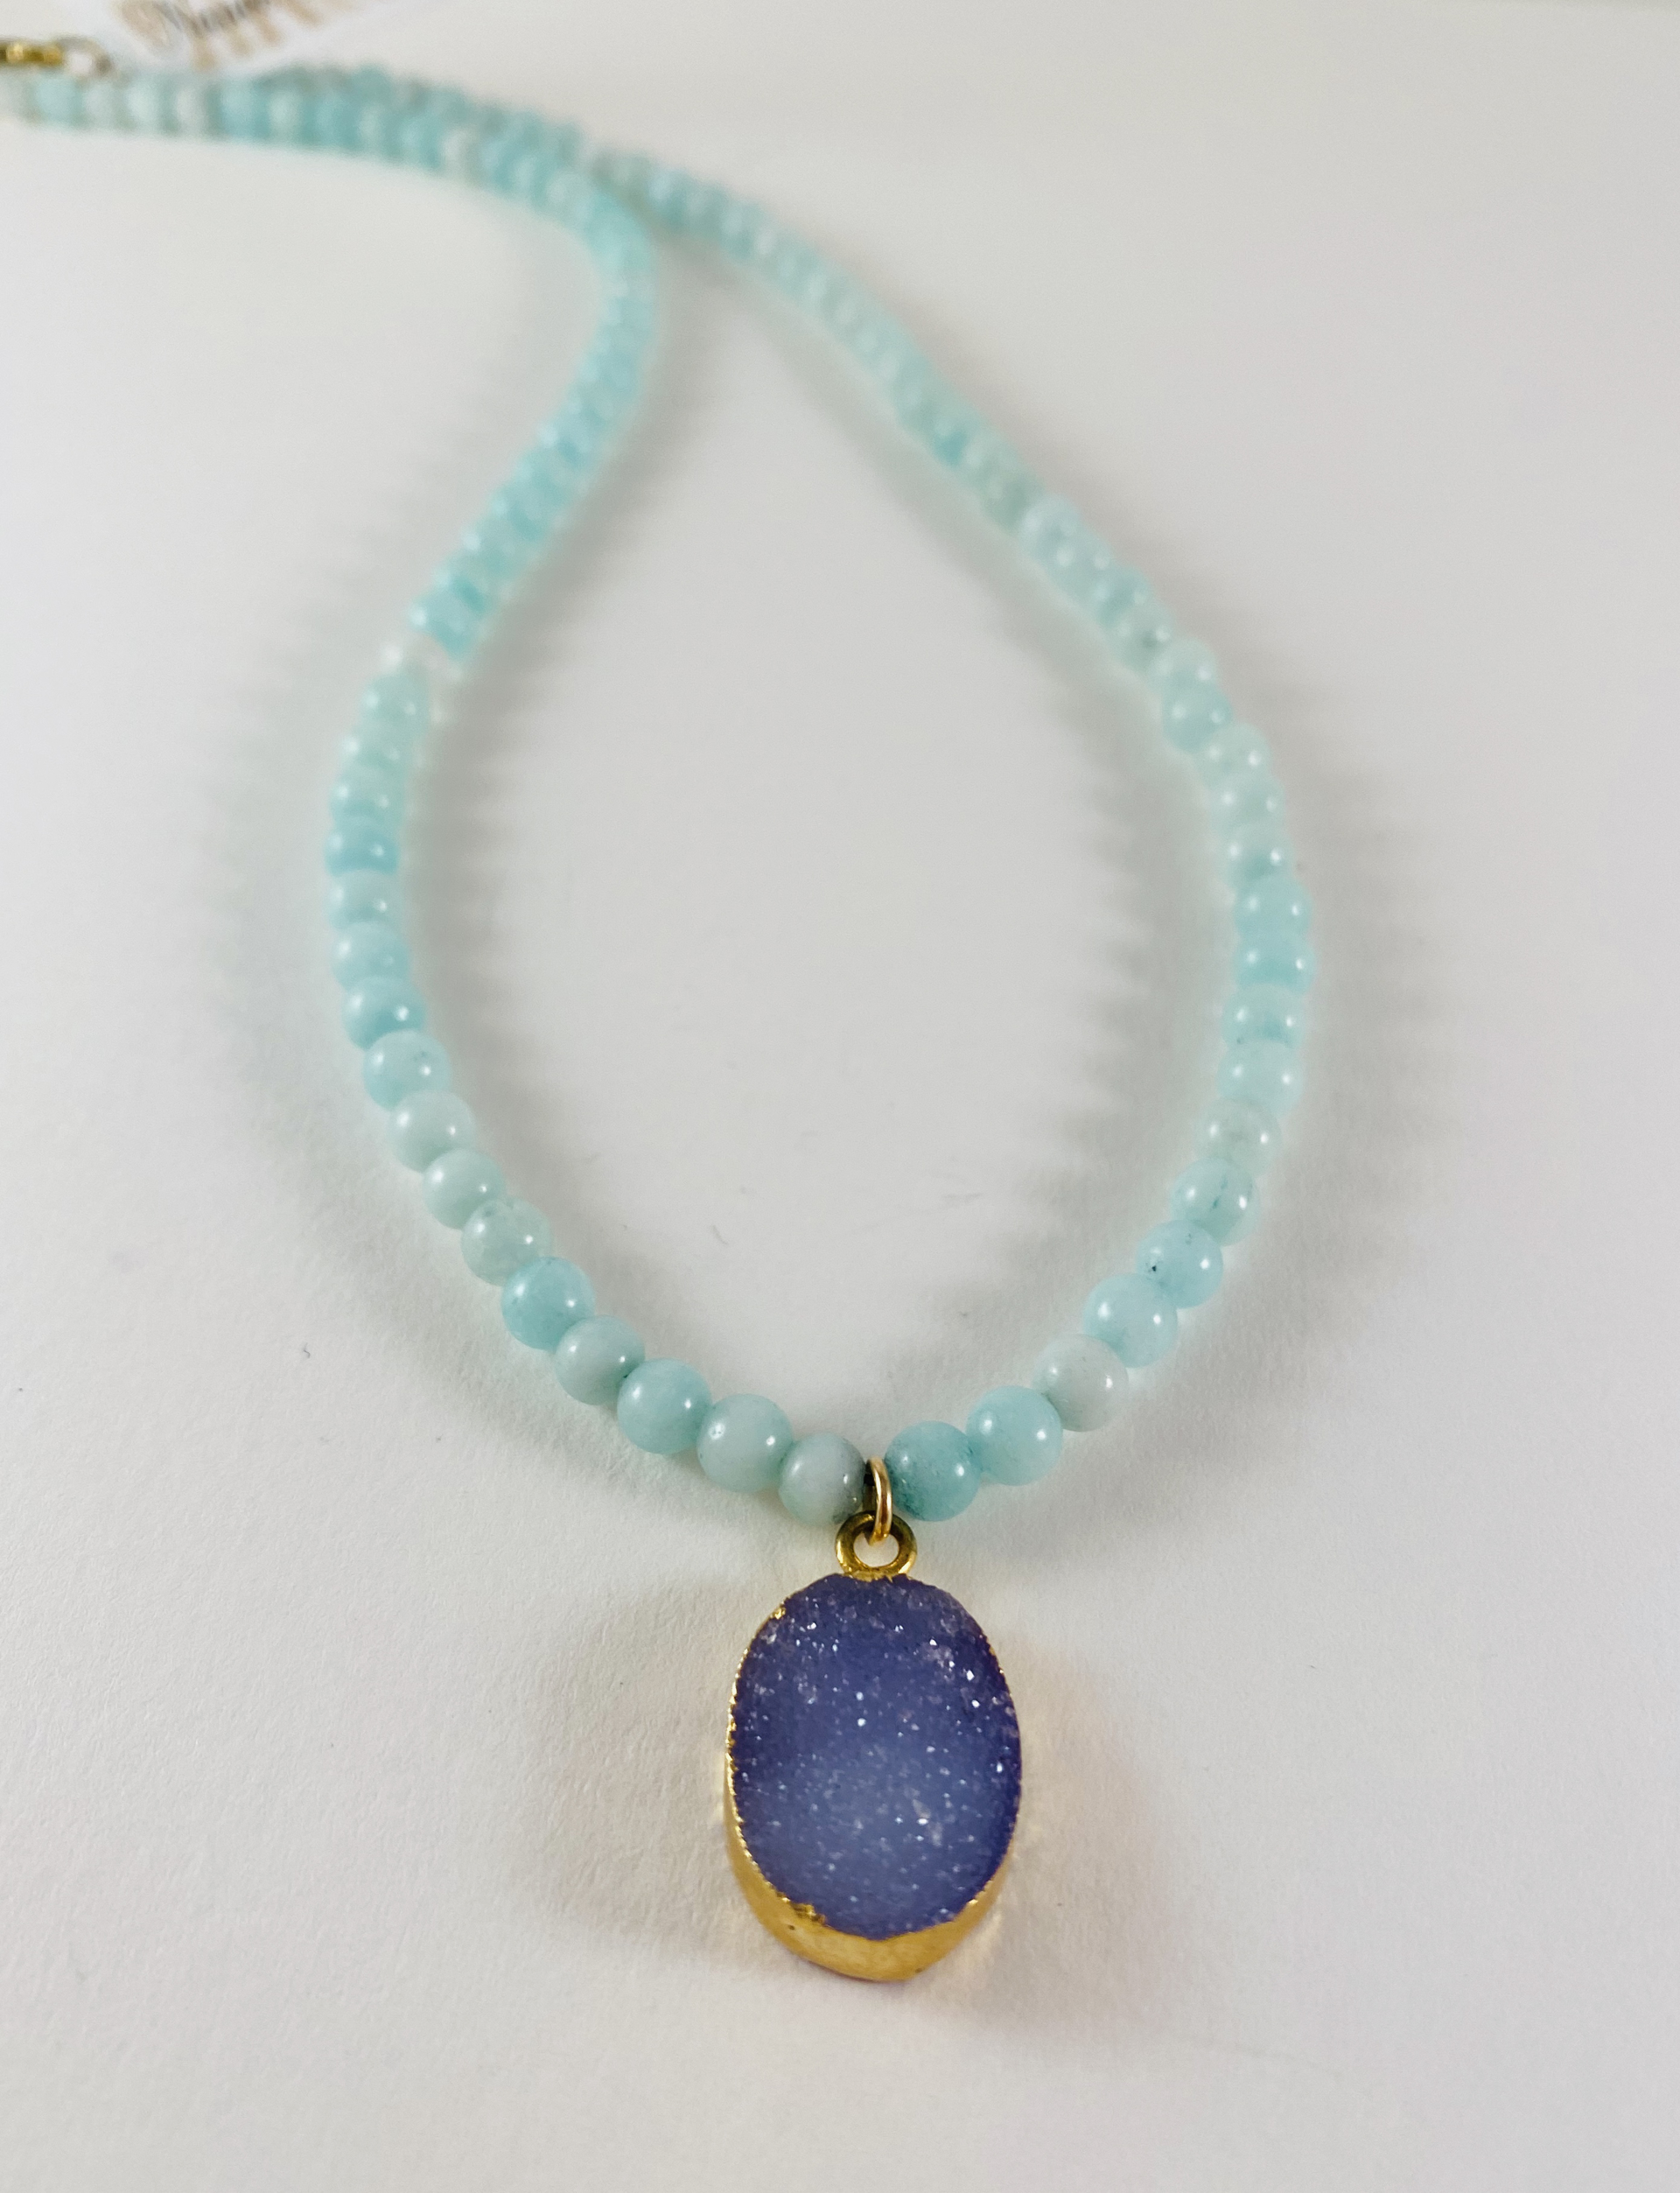 Aqua Jade Bead Necklace, purple druzy pendant ND6 by Nance Trueworthy